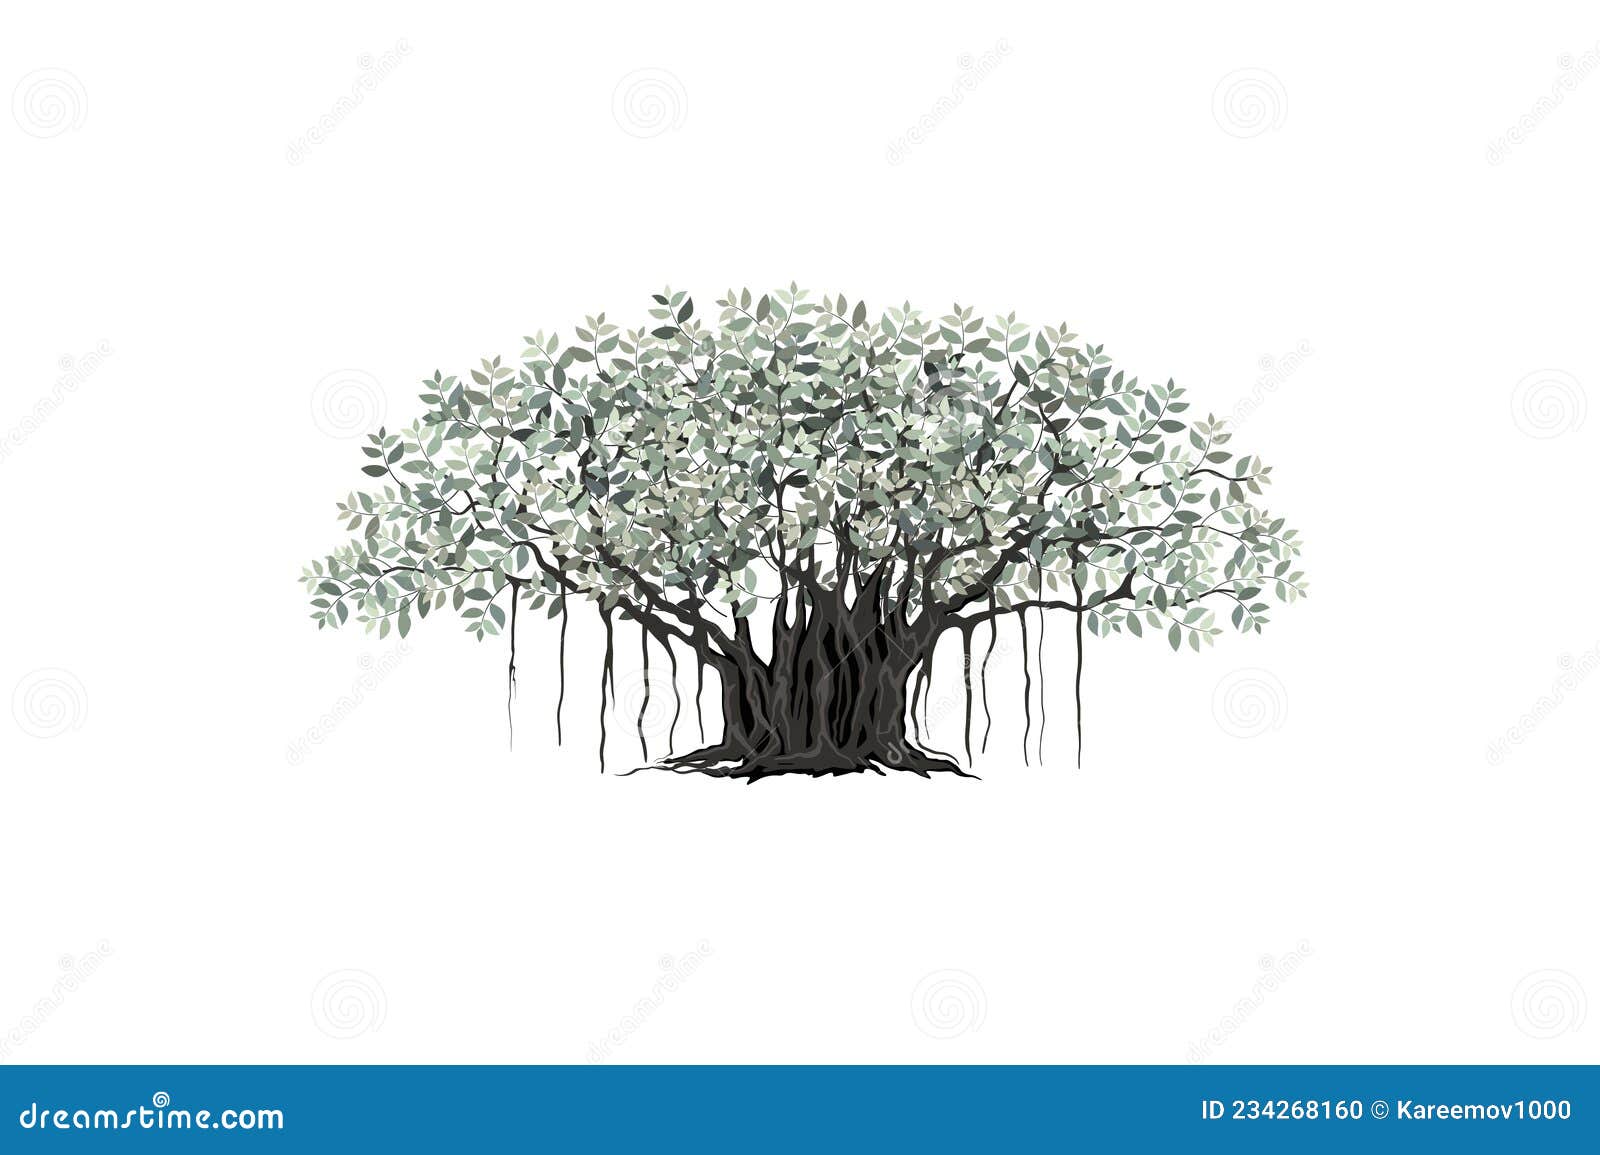 Banyan Tree Vector Stock Photos and Images  123RF